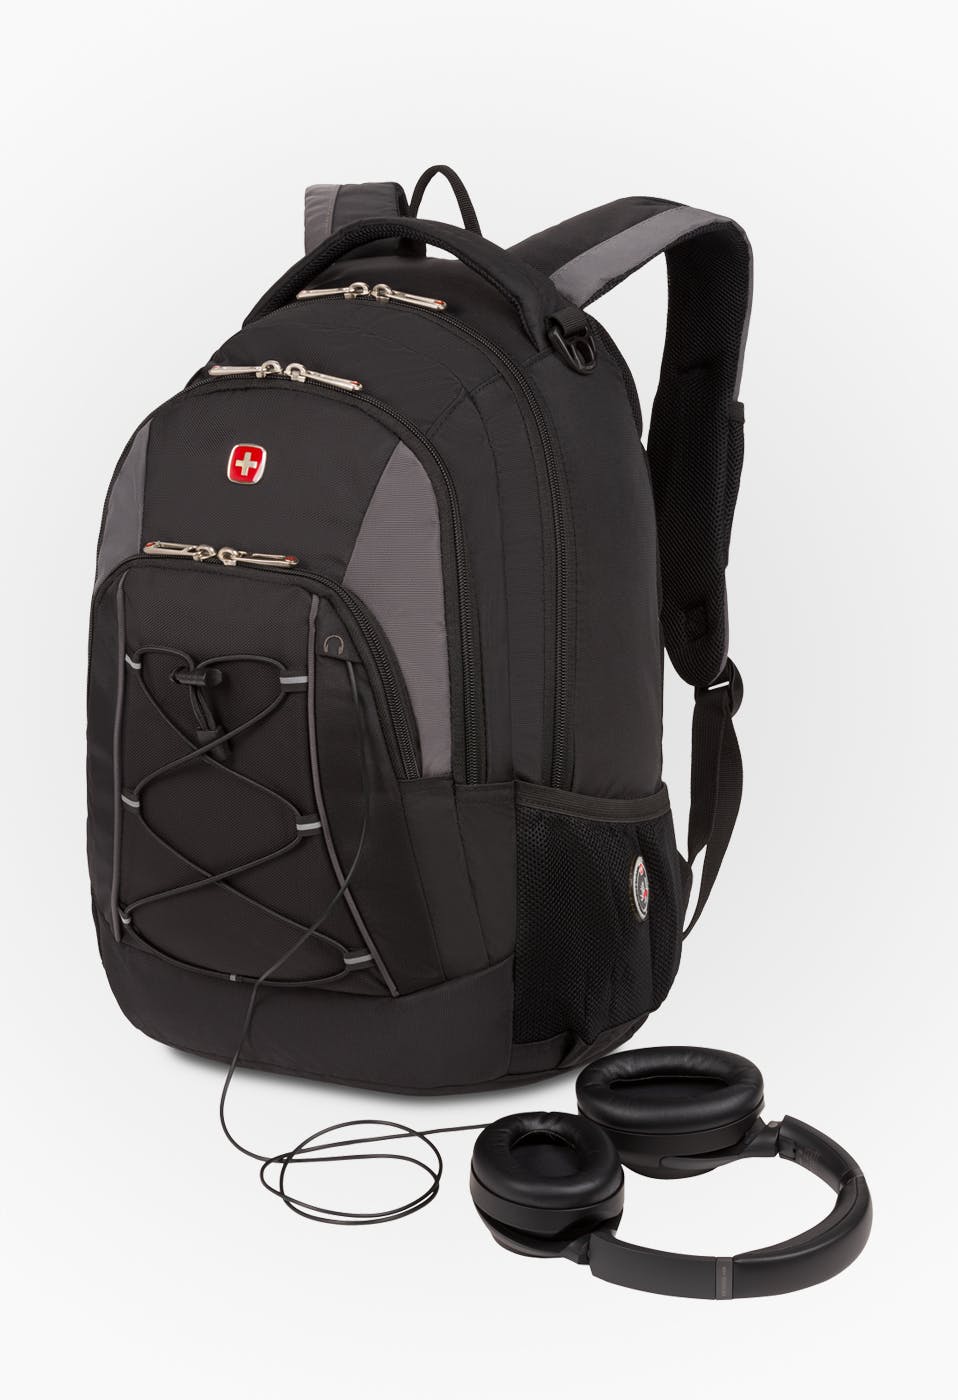 Explore trending backpacks by SwissGear